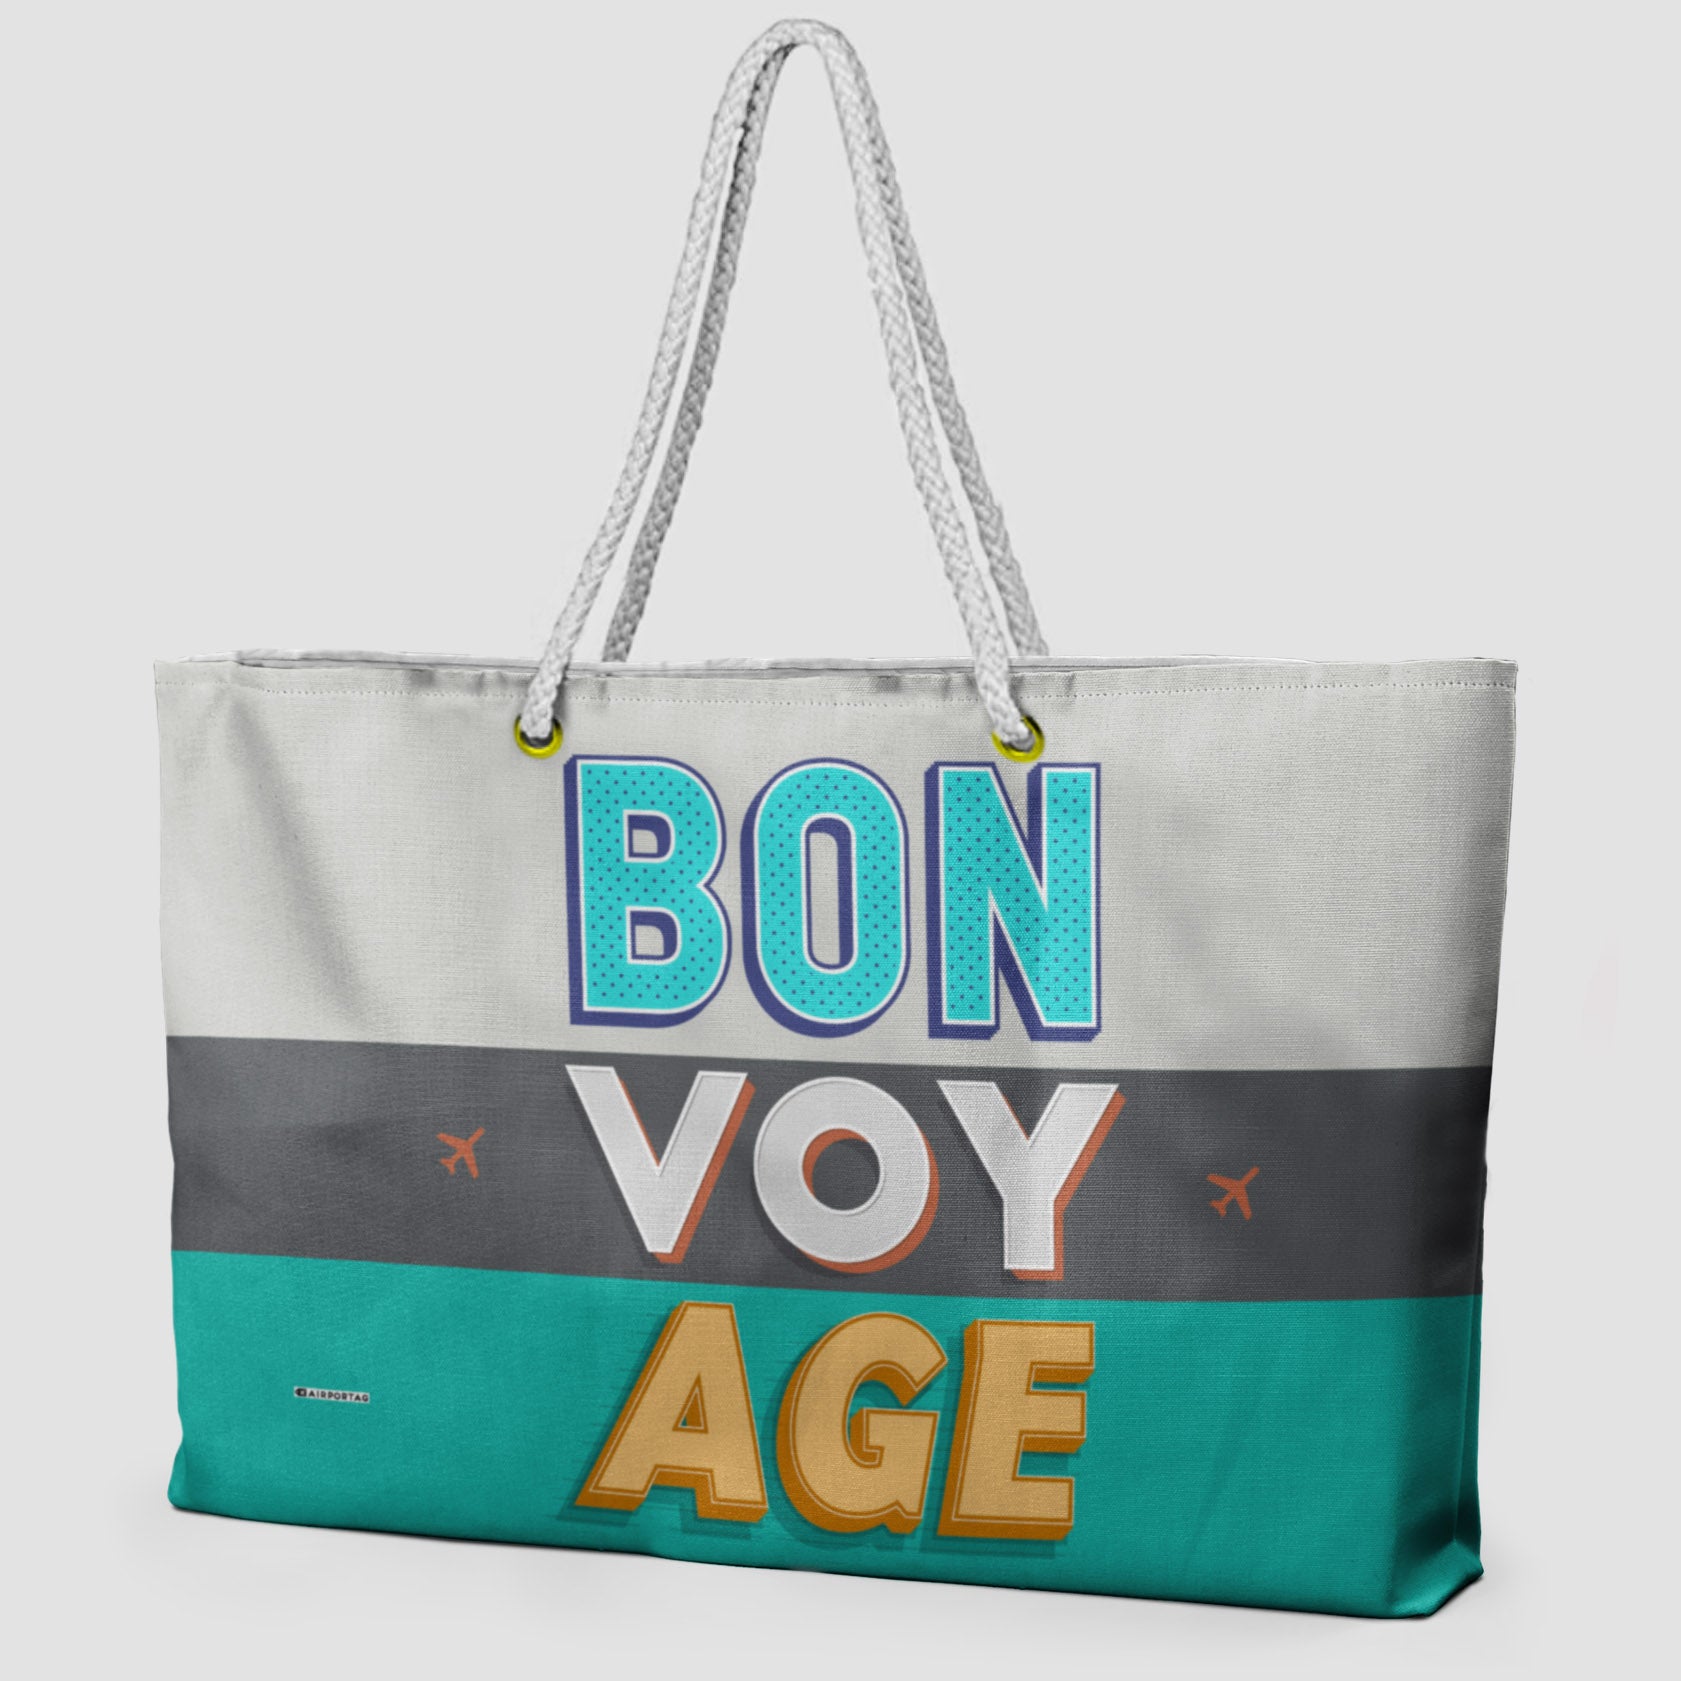 BON VOY AGE - Weekender Bag - Airportag